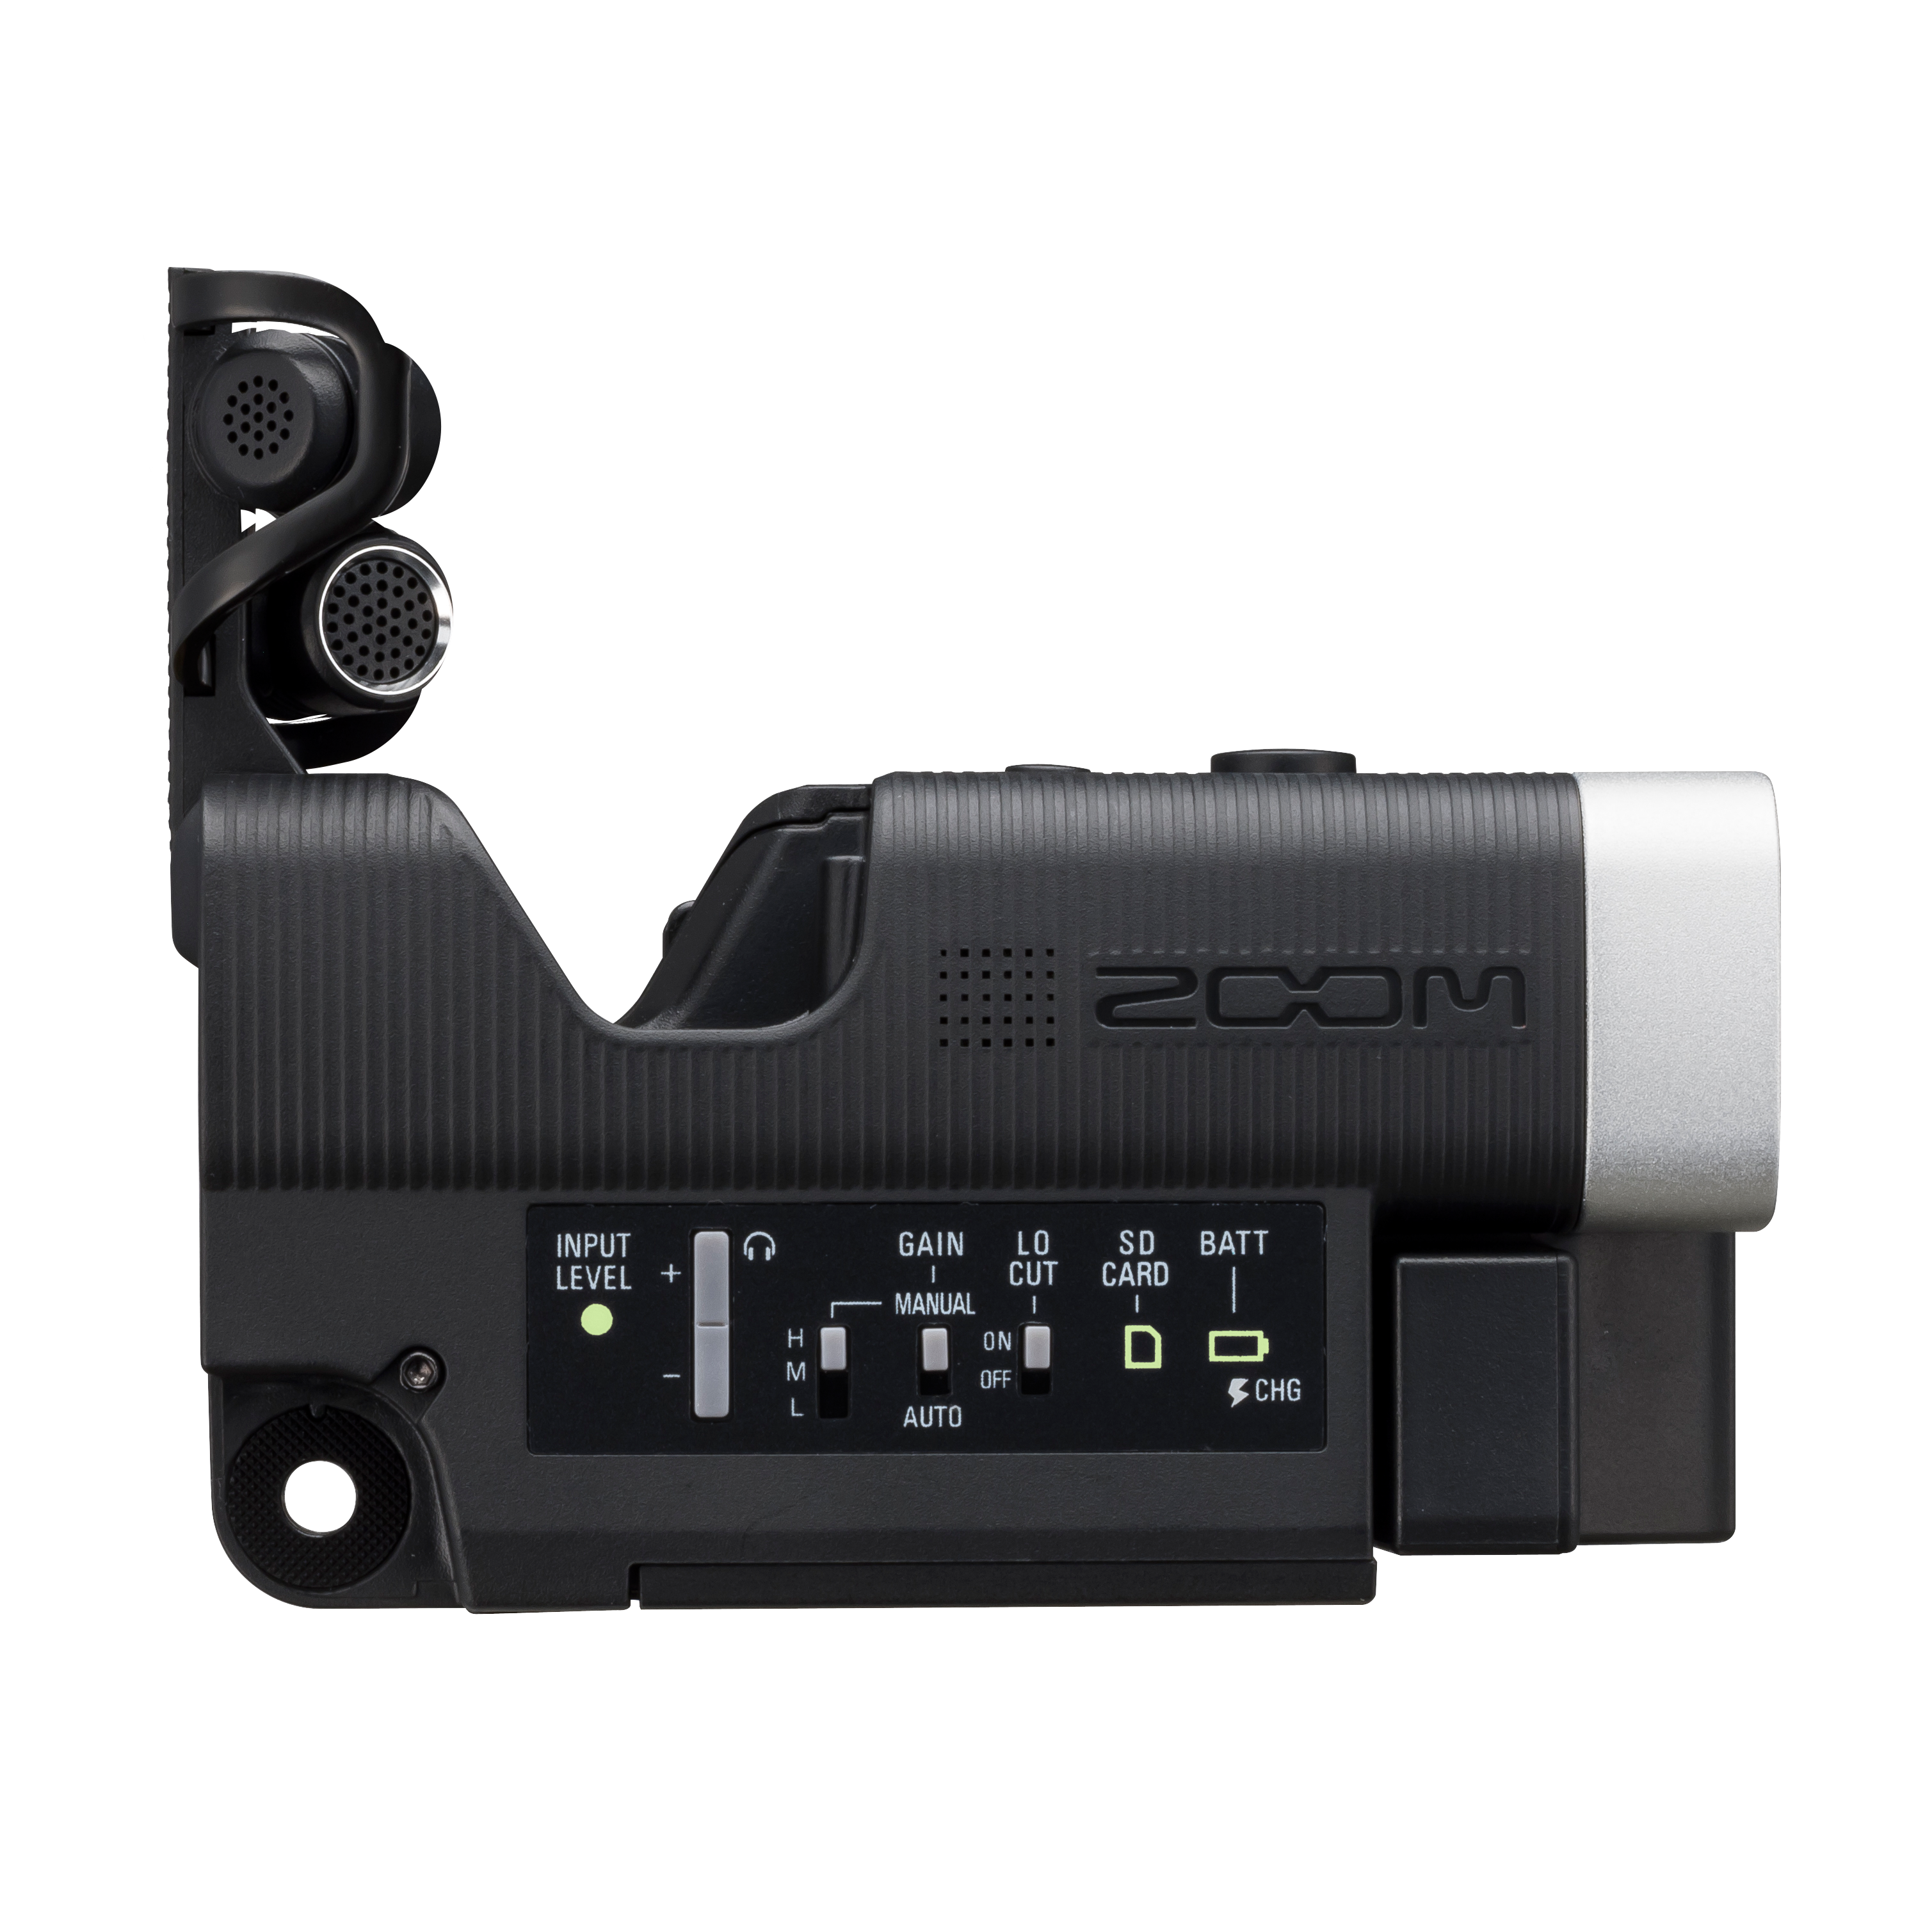 Q4 Handy Video Recorder | Zoom